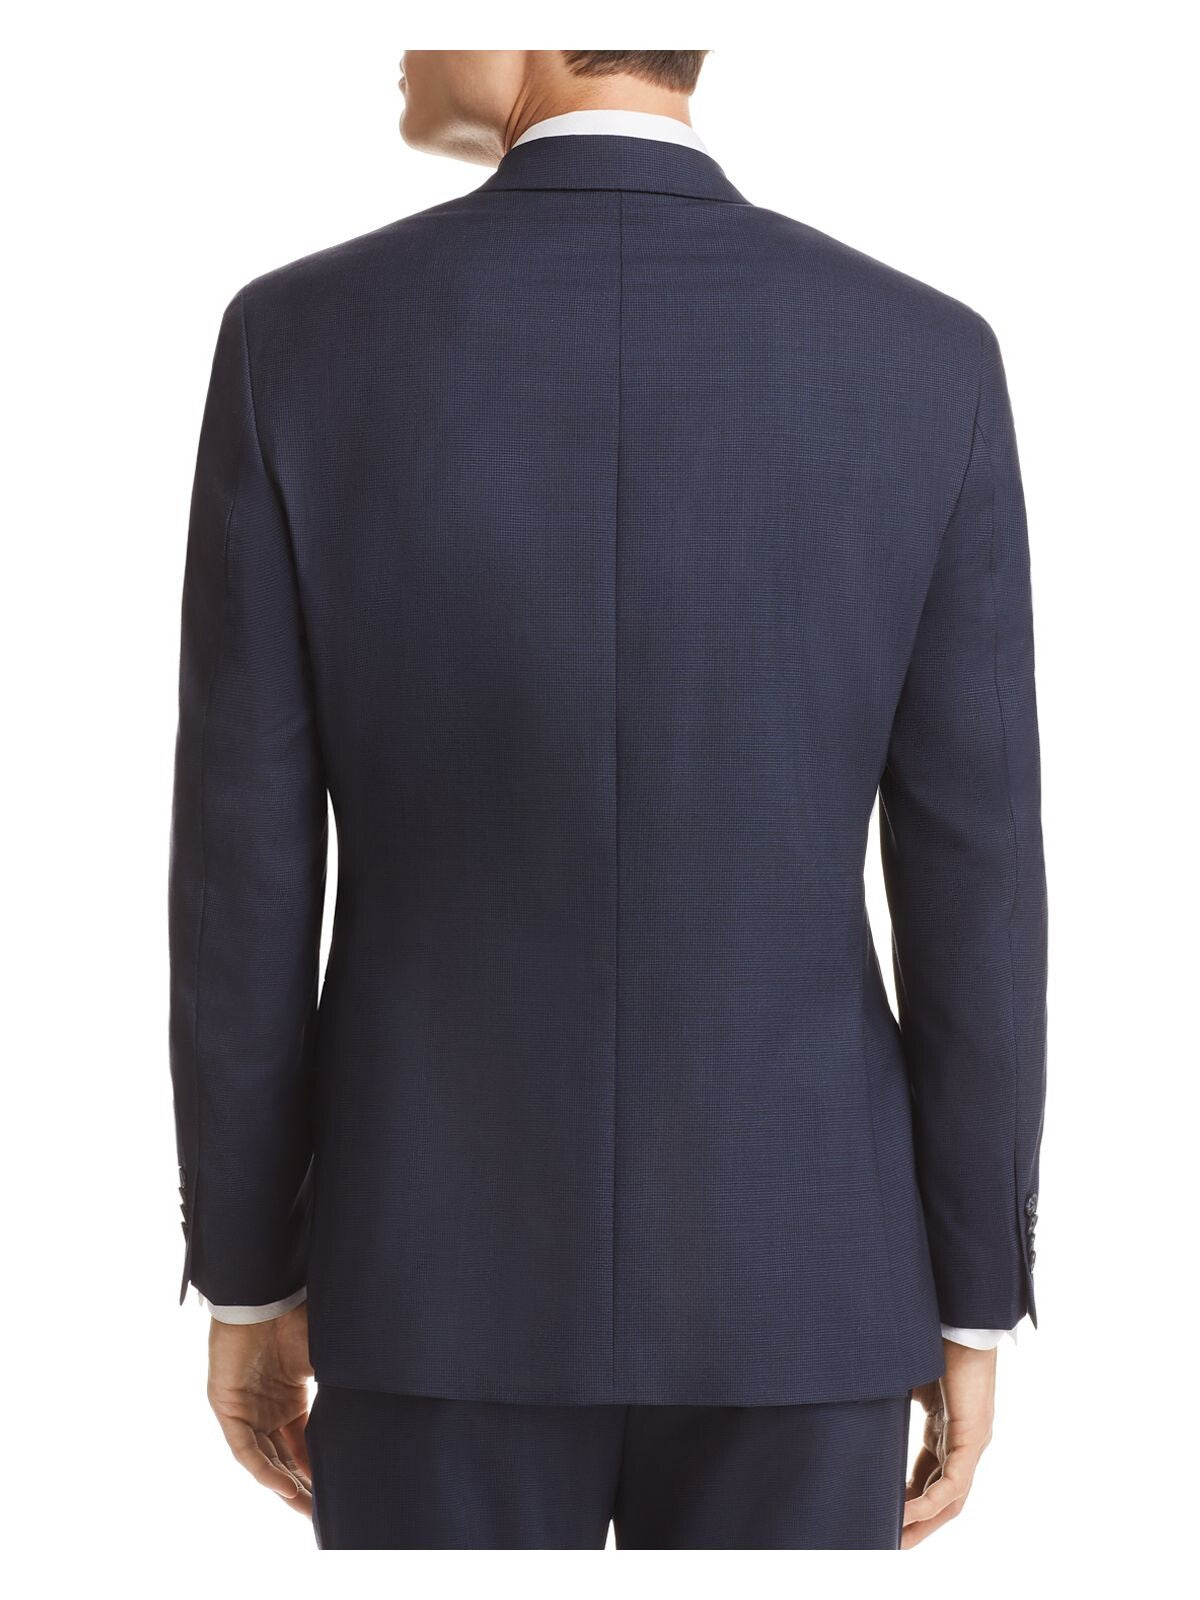 MICHAEL KORS Mens Navy Single Breasted, Classic Fit Wool Blend Suit Separate Blazer Jacket 42R